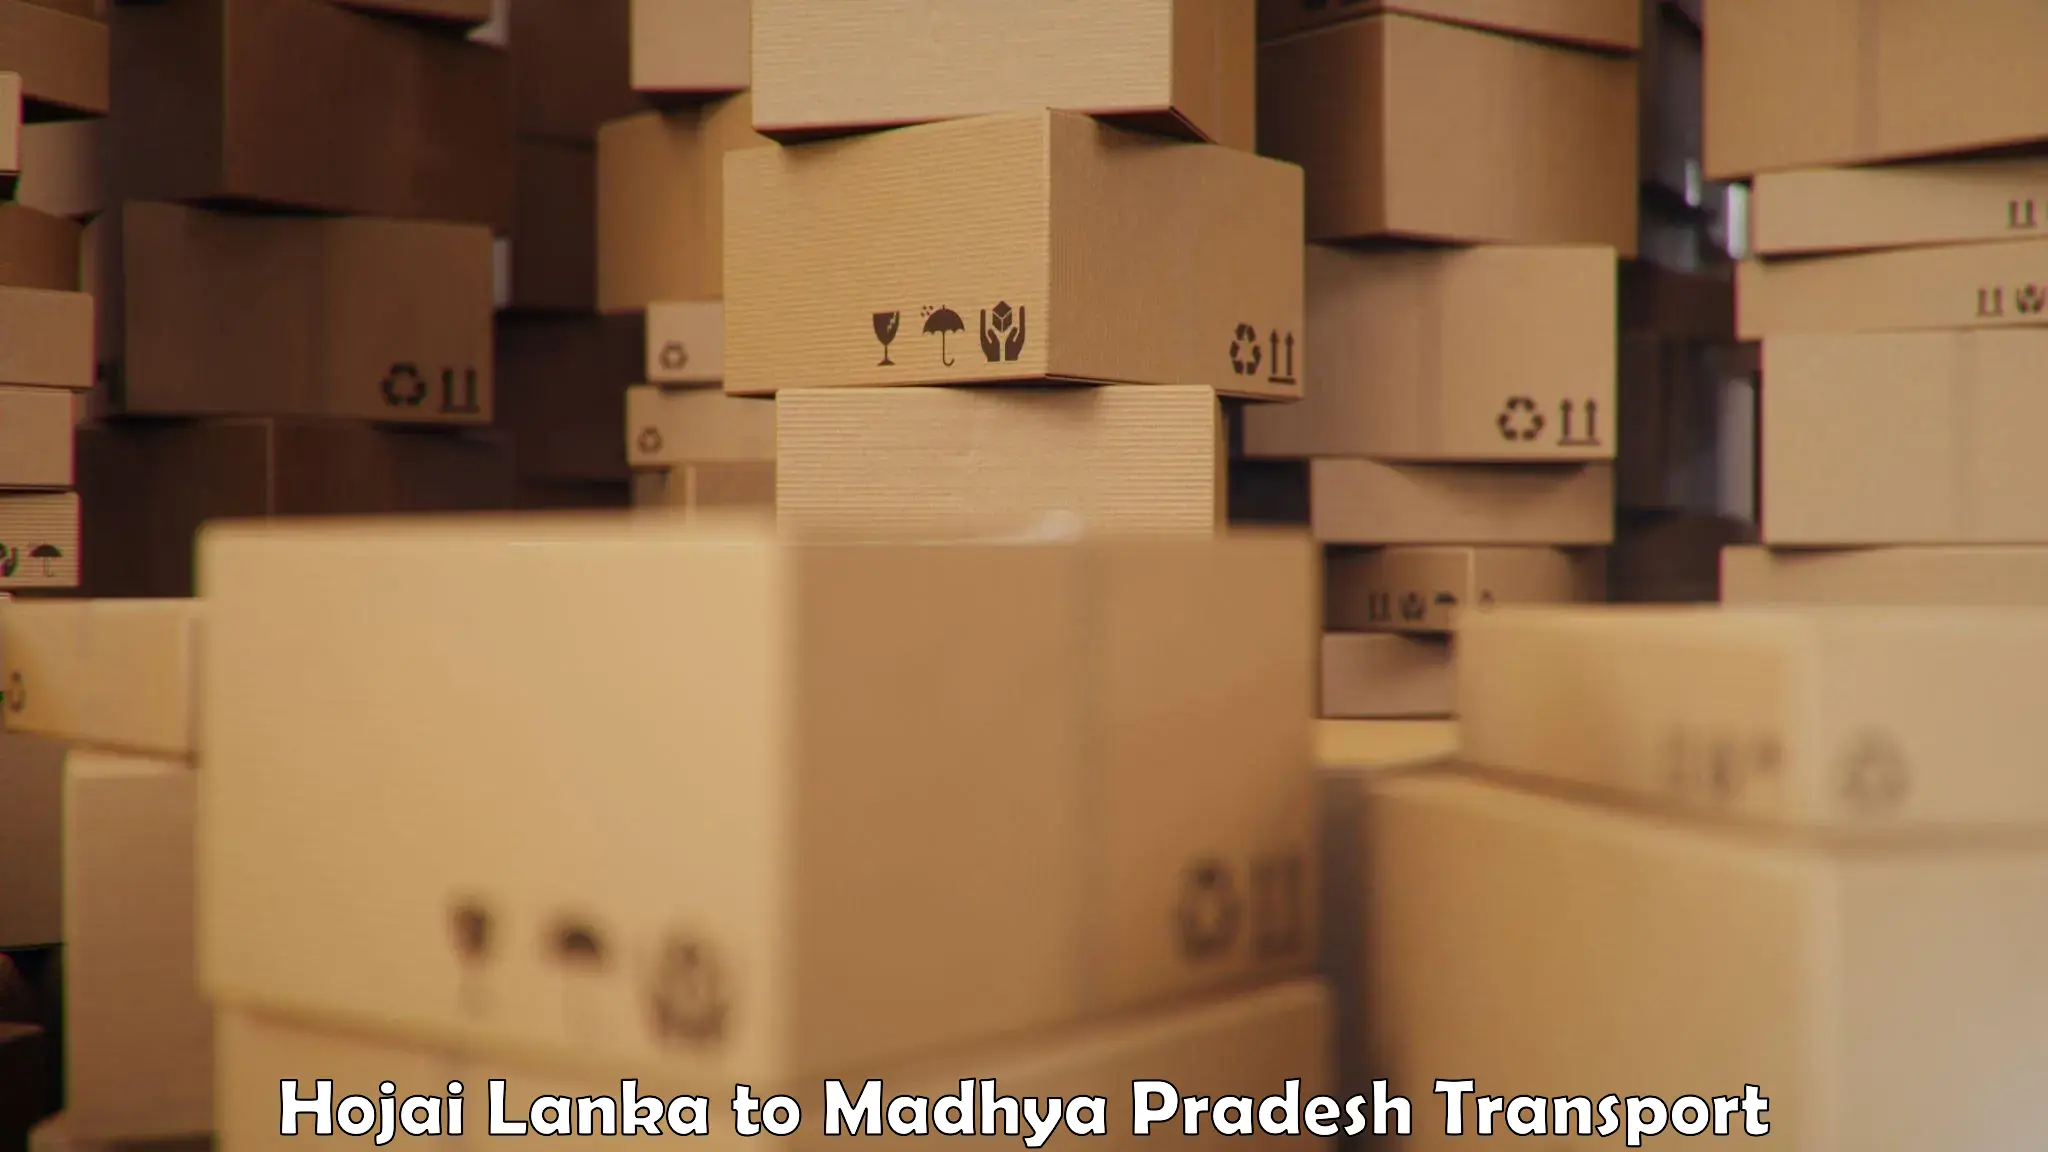 Nearest transport service Hojai Lanka to Madhya Pradesh